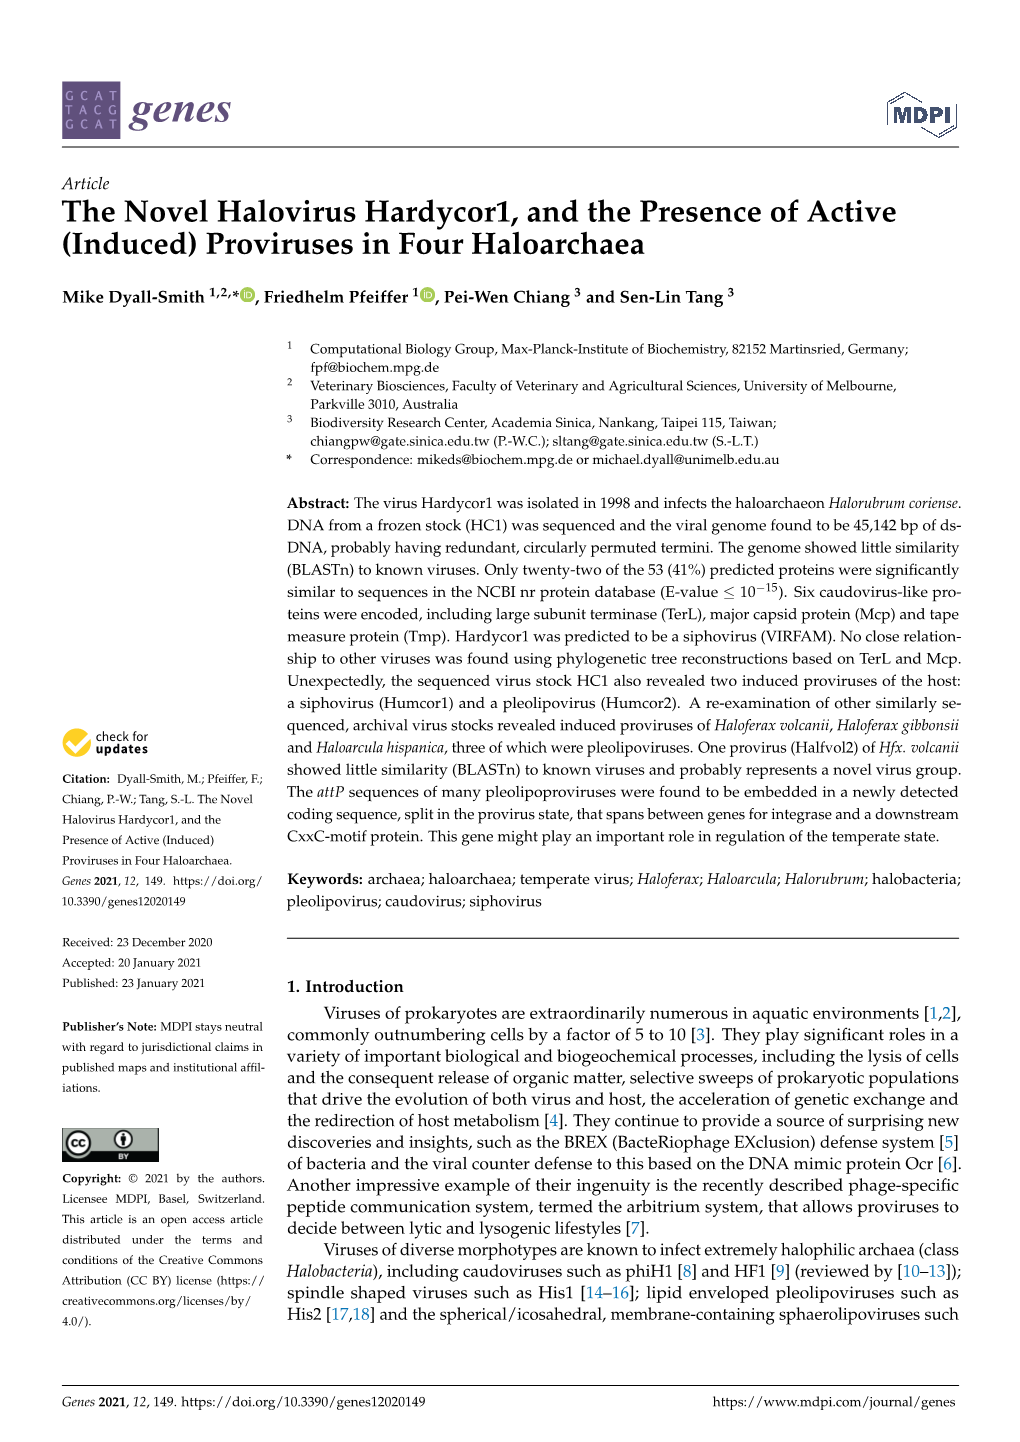 The Novel Halovirus Hardycor1, and the Presence of Active (Induced) Proviruses in Four Haloarchaea